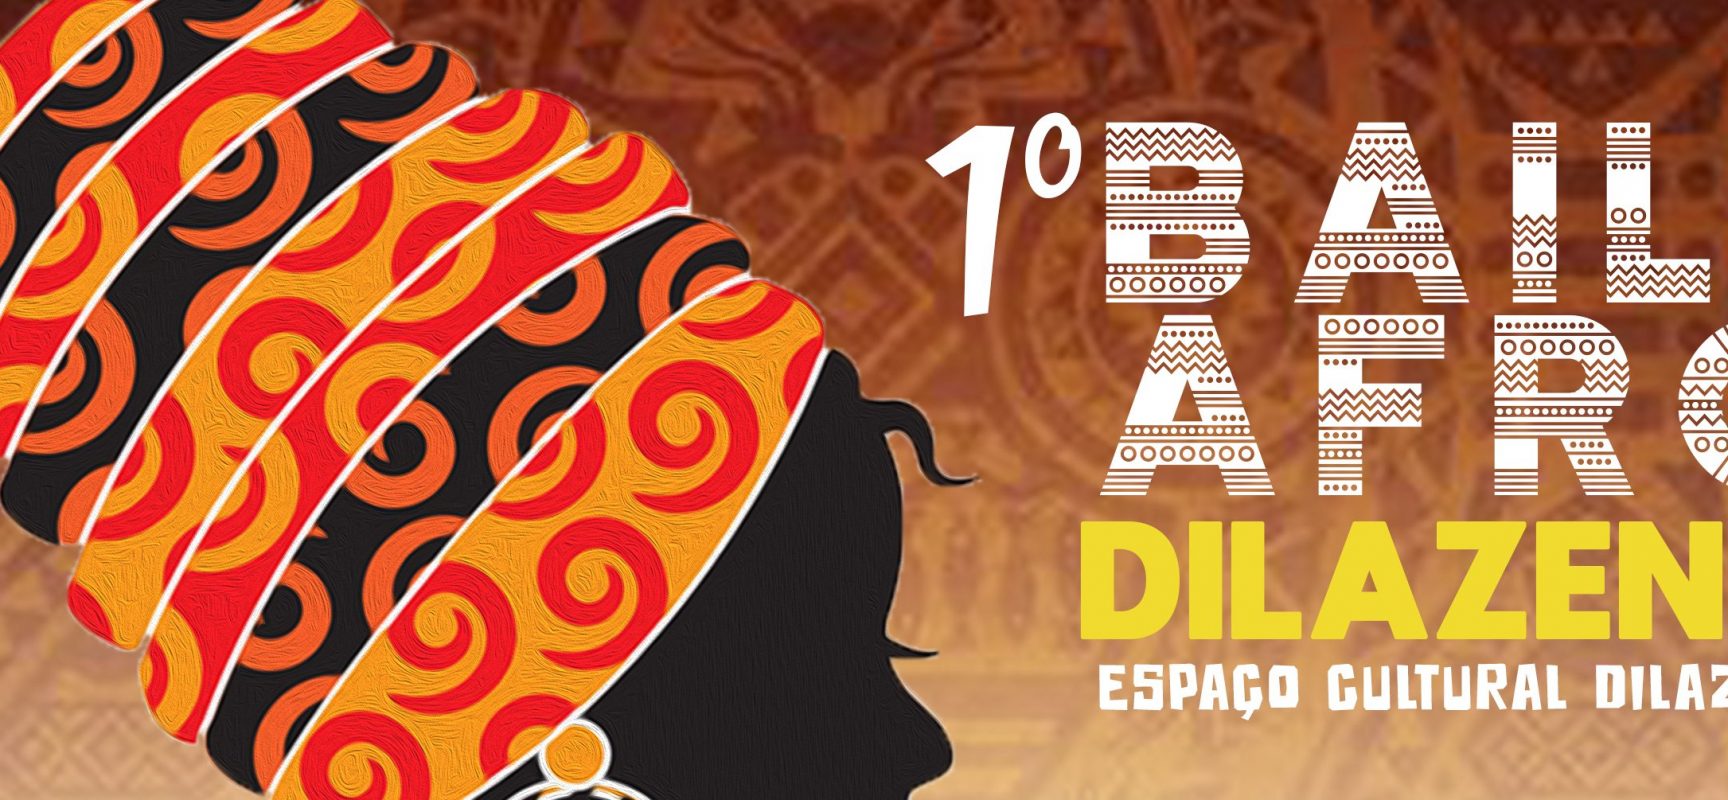 Bloco Dilazenze promove Baile Afro nesta sexta (14)